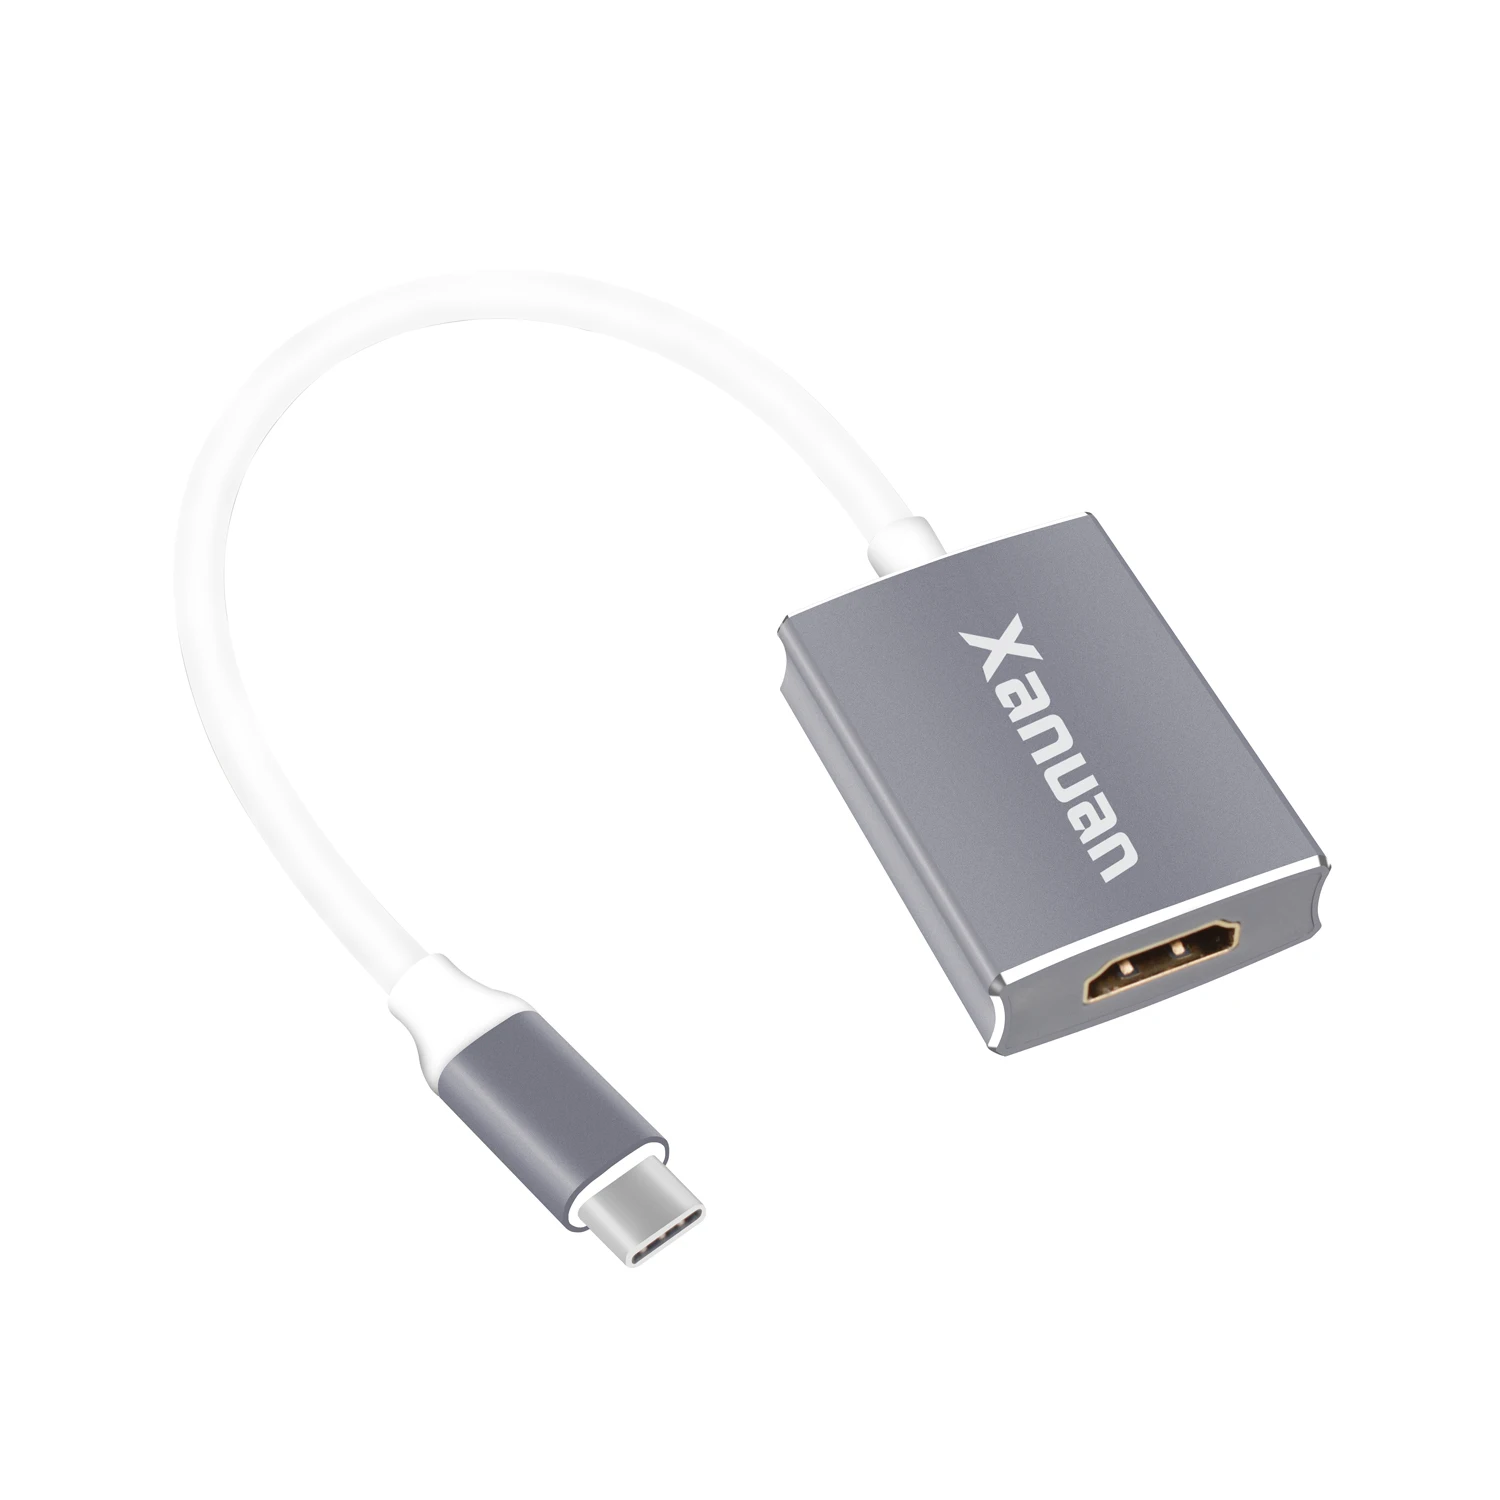 hdmi connector to macbook air